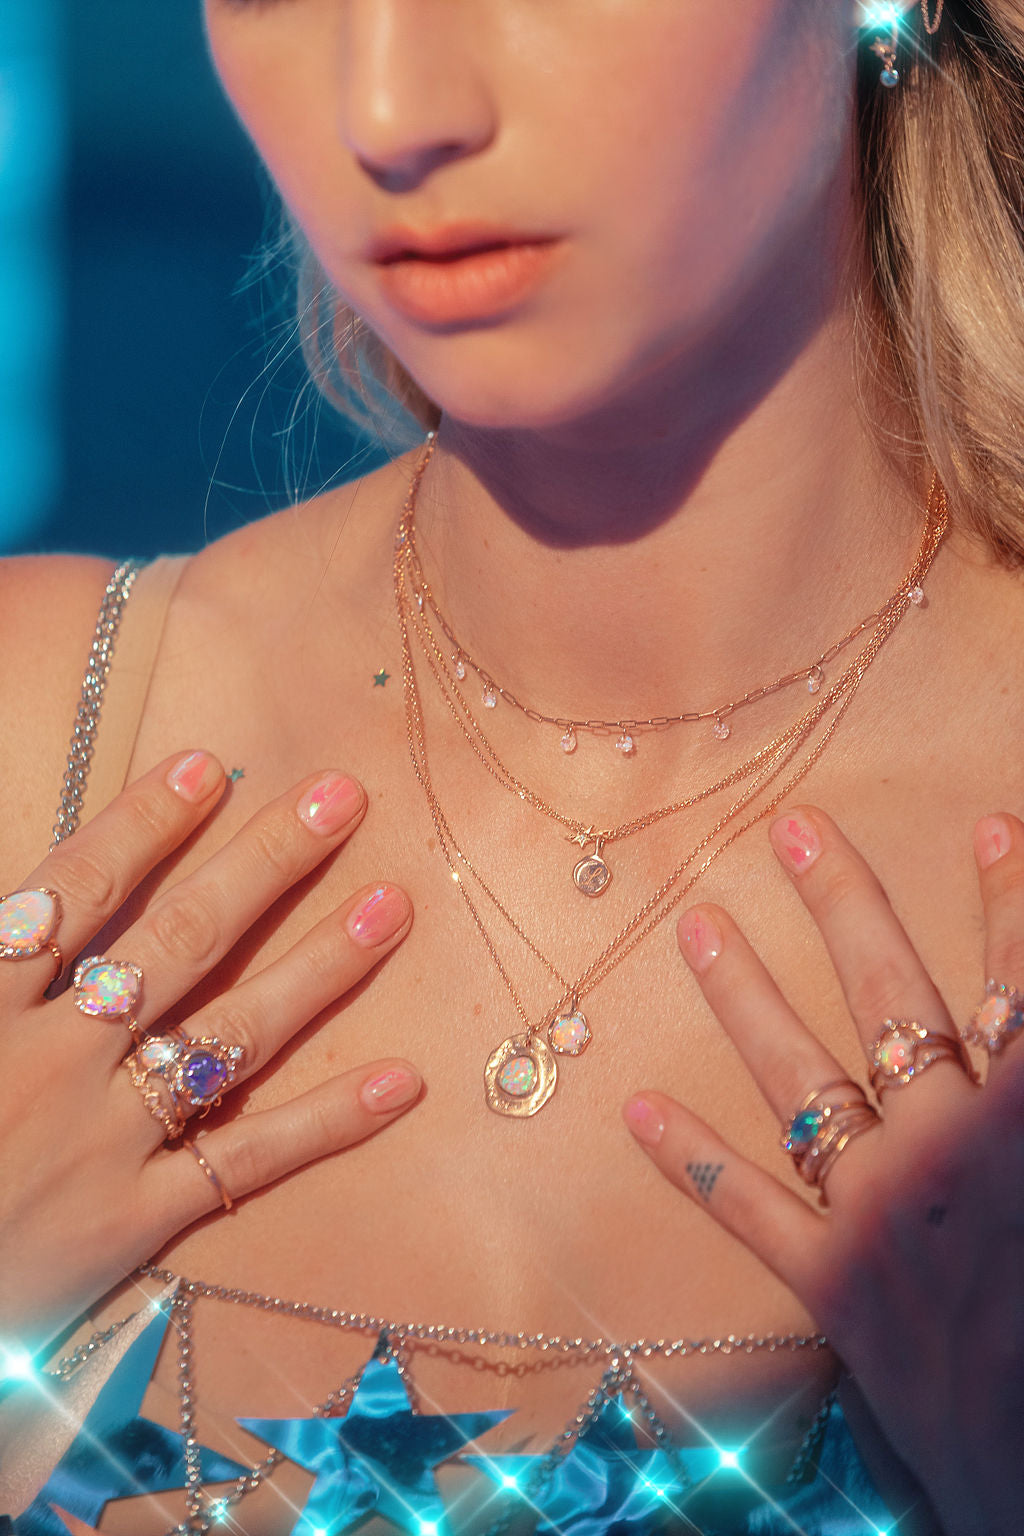 Star Splash Australian Opal Necklace